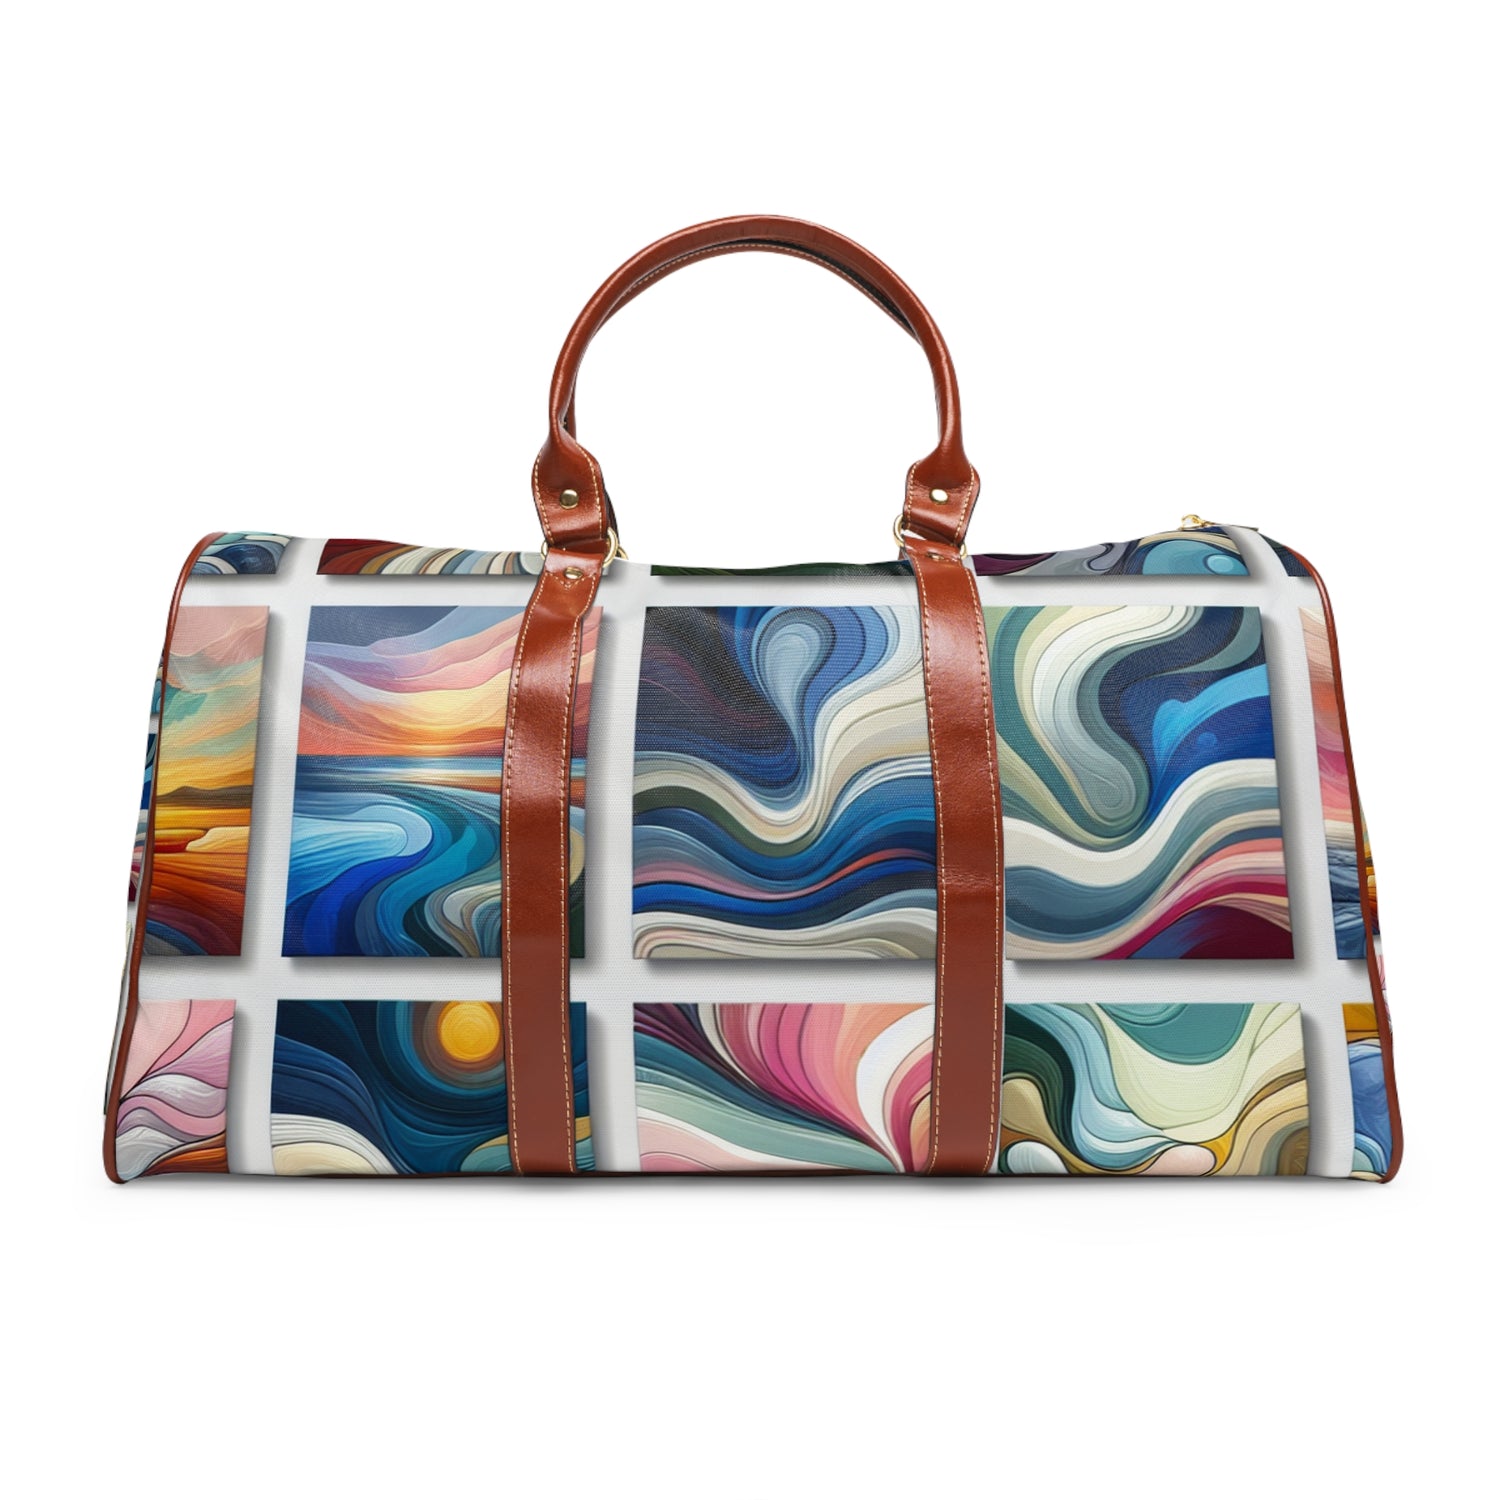 CNOBD ART Augustine Leclair - Waterproof Travel Bag